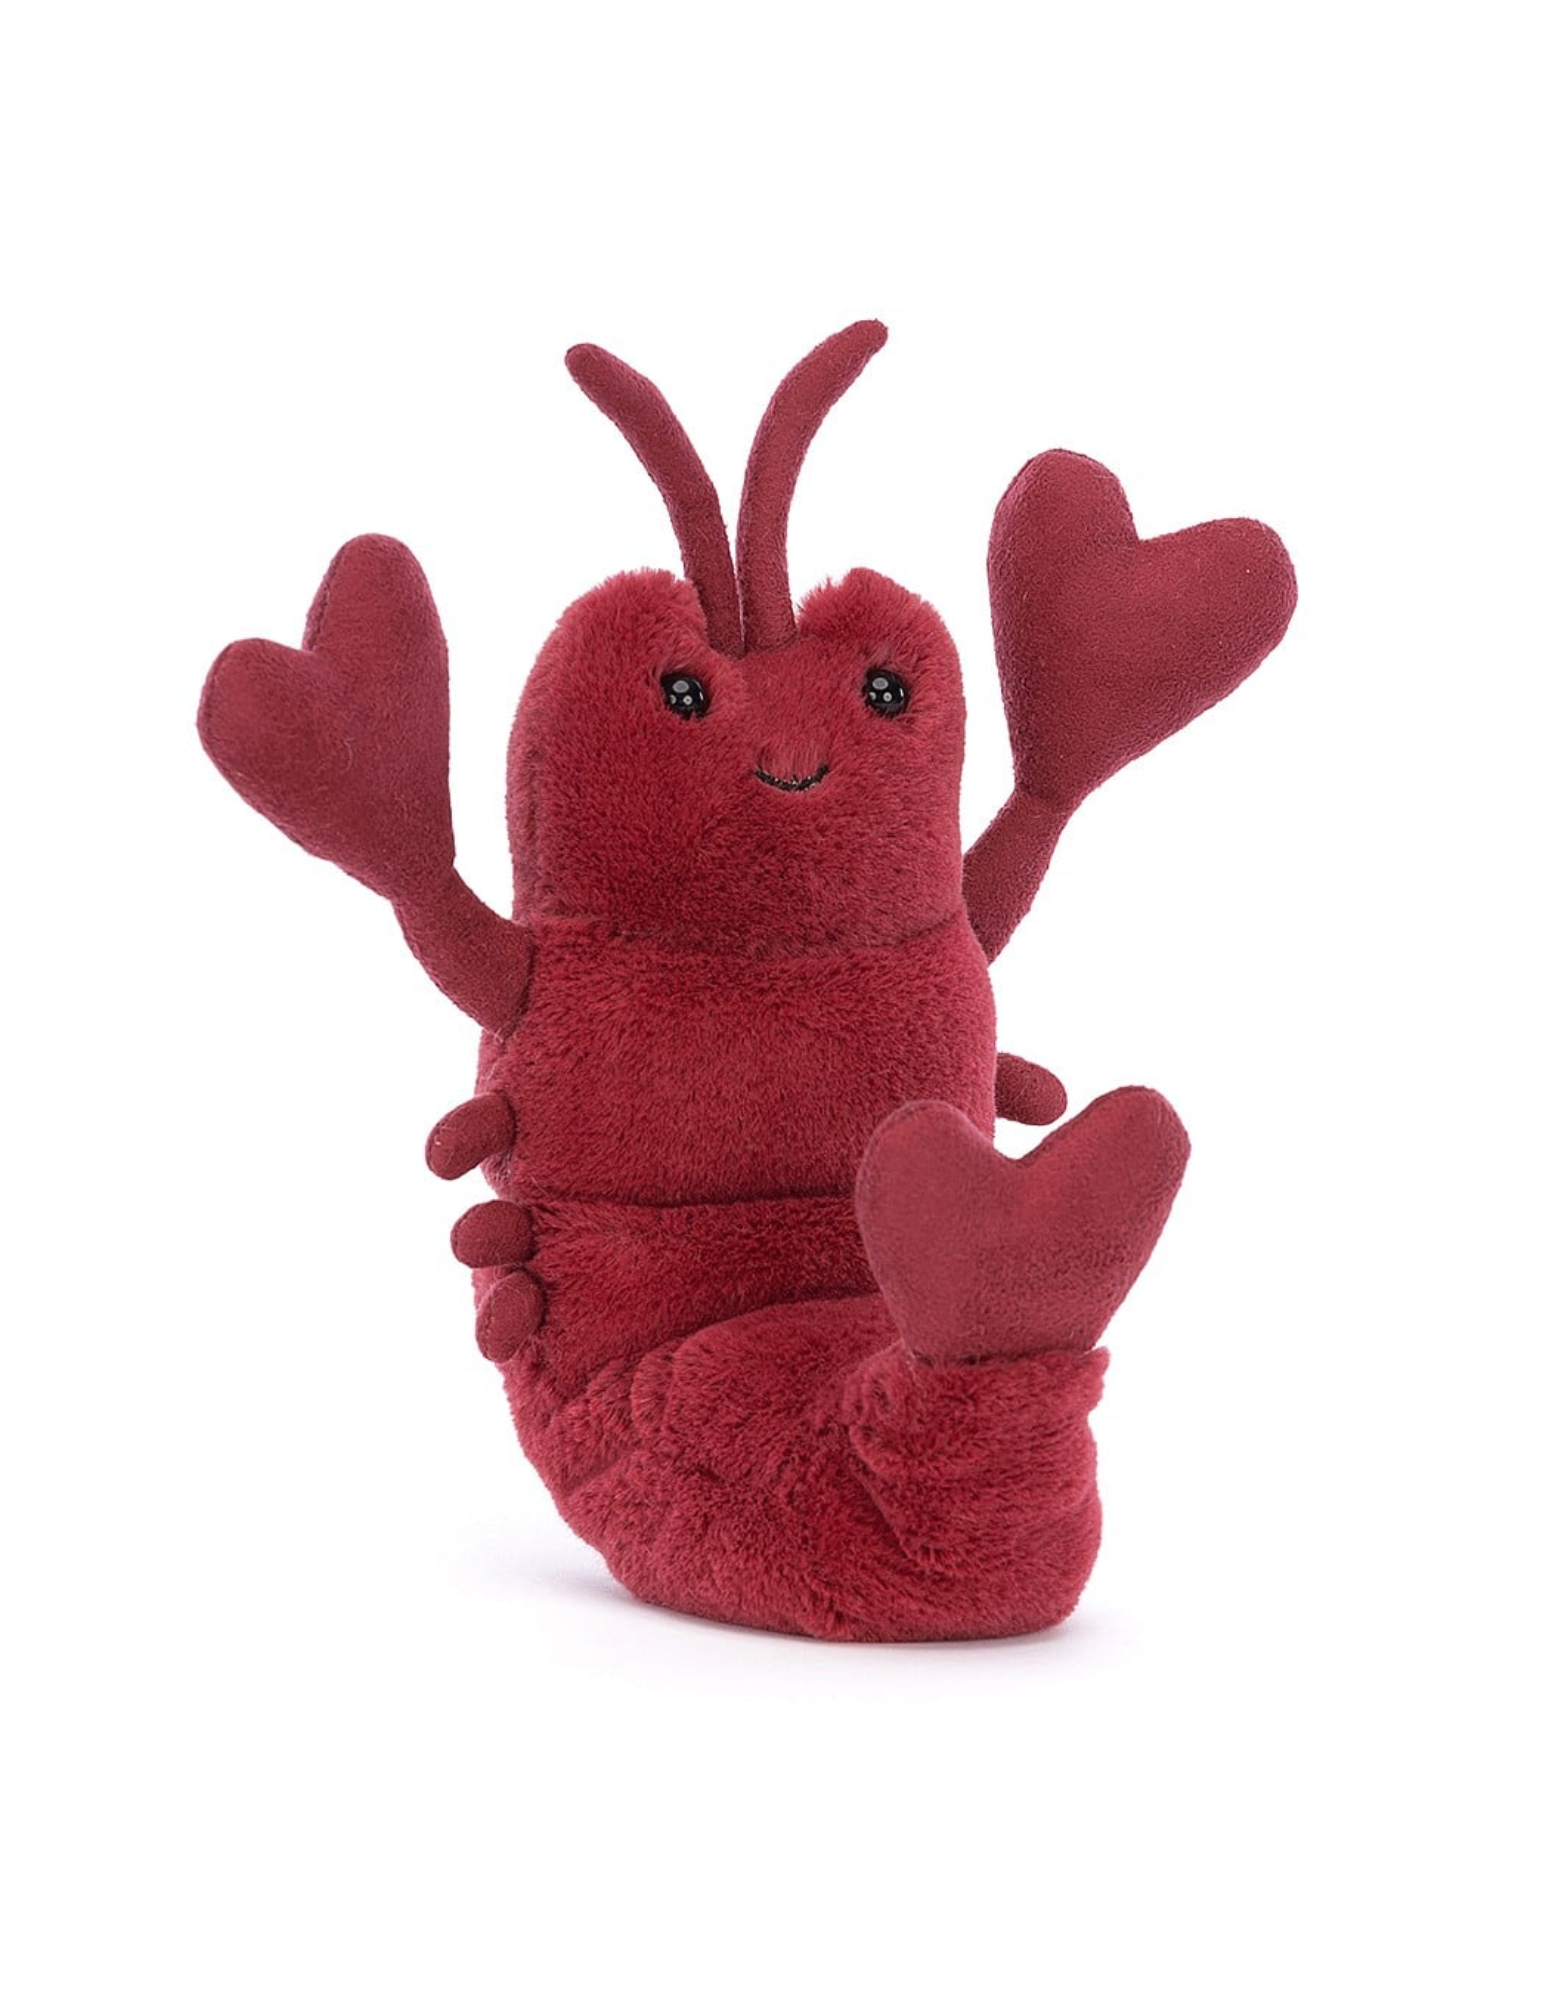 Jellycat Love Me Lobster